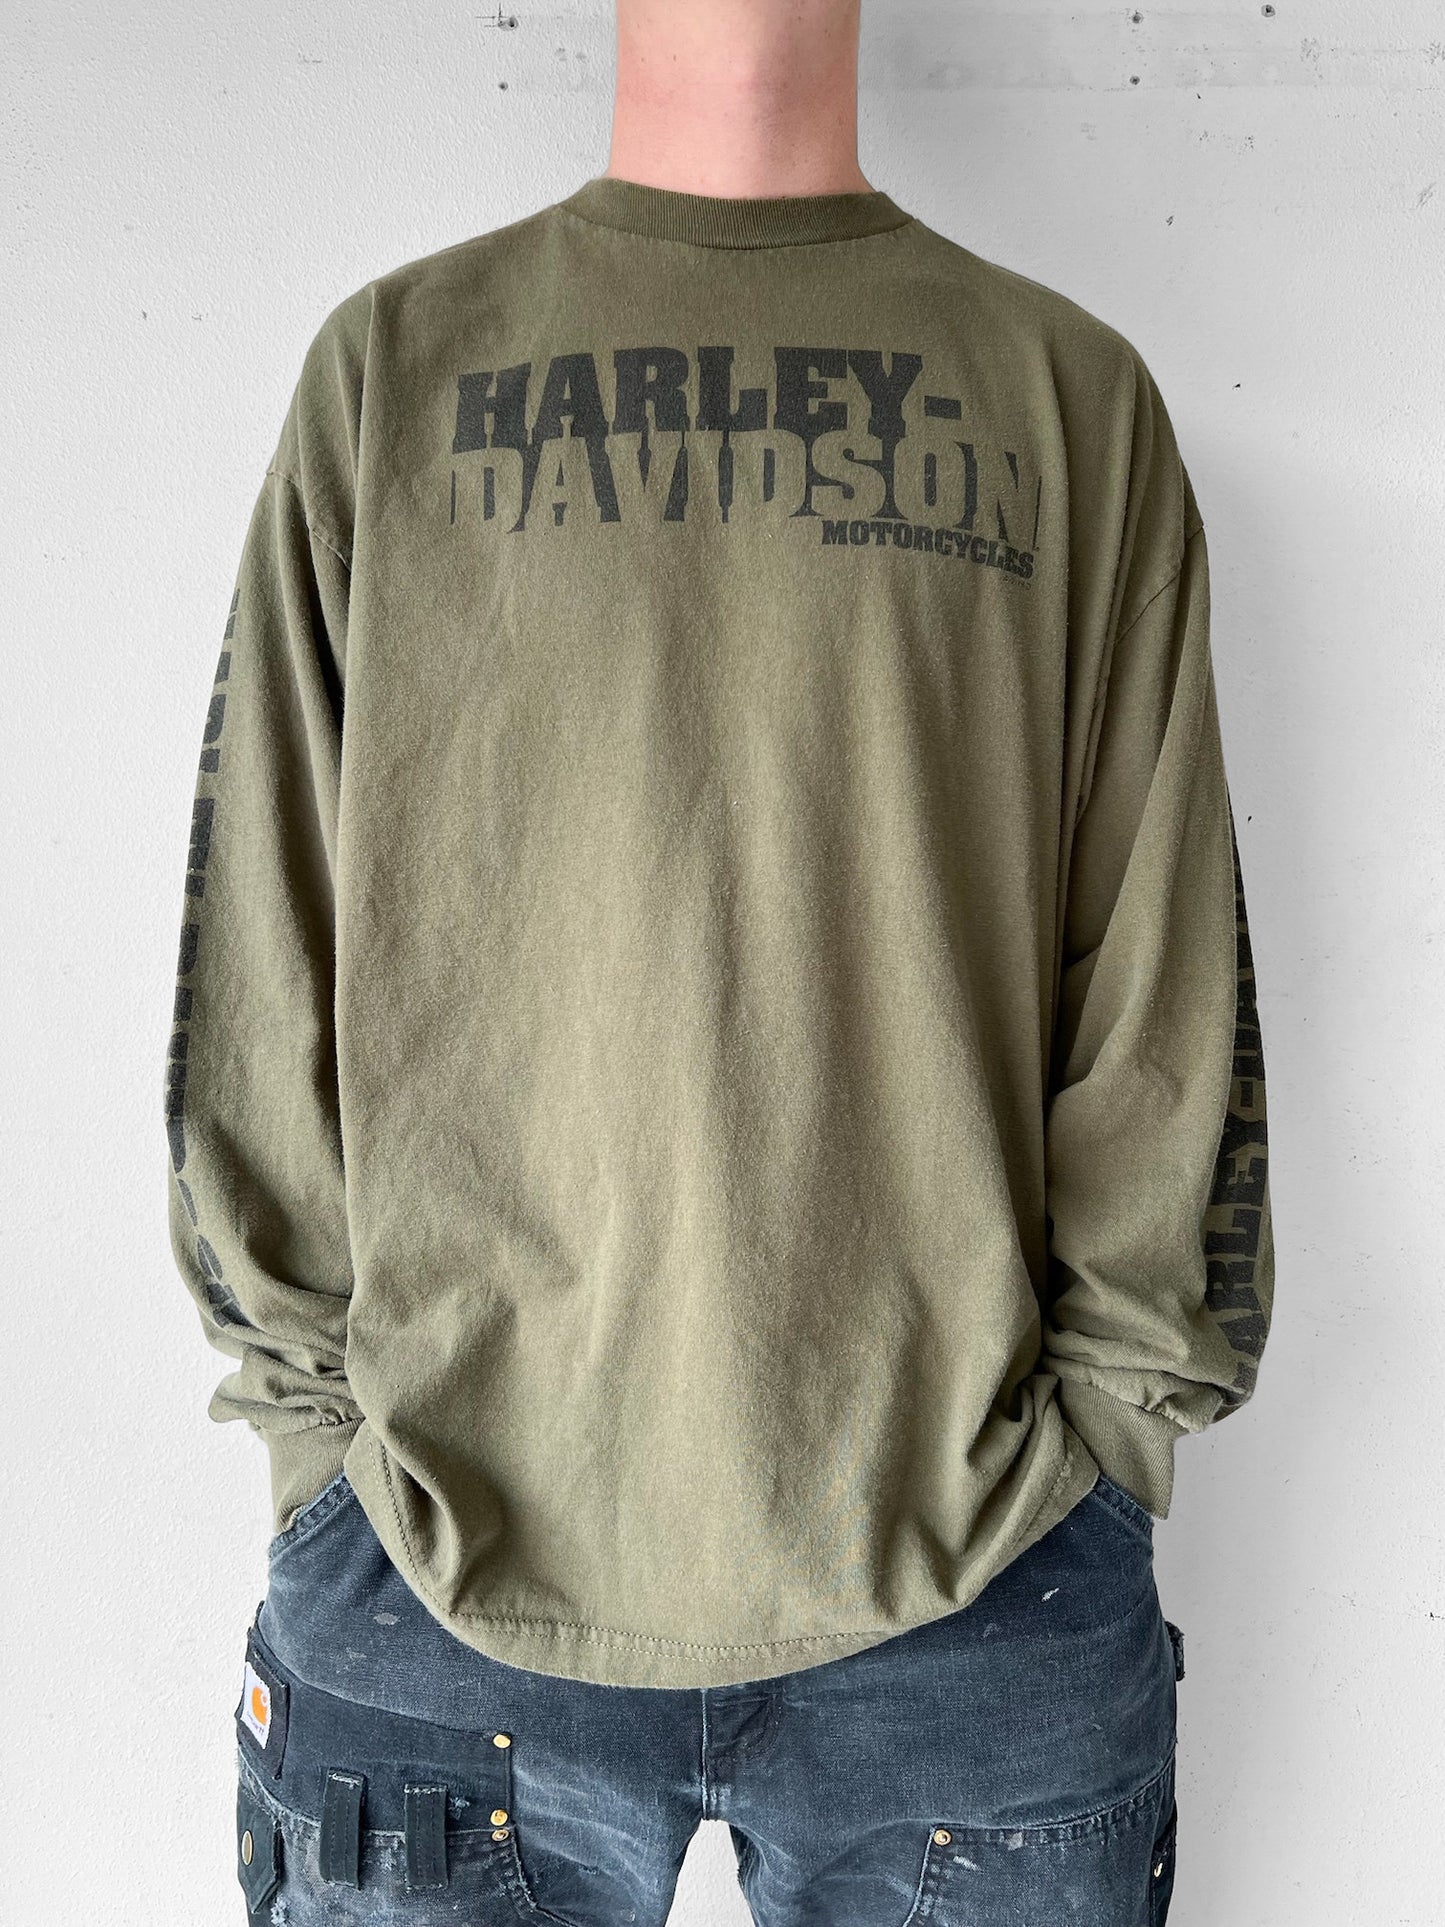 Harley Davidson Long Sleeve Shirt - XXL